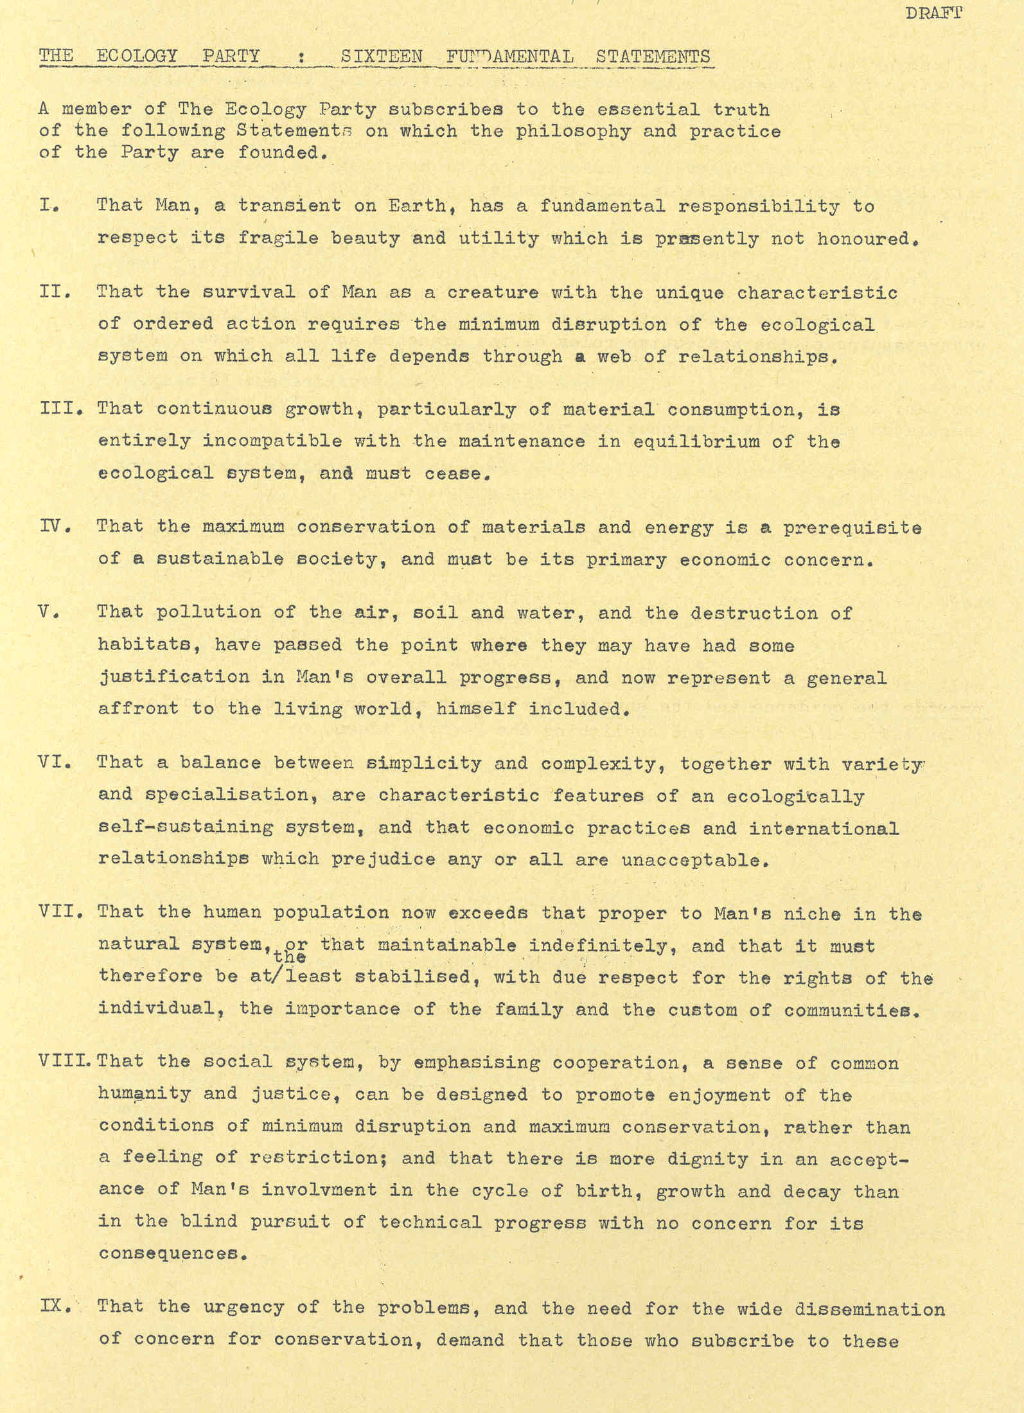 'The Ecology Party: Sixteen fundamental statements' (draft), 1977